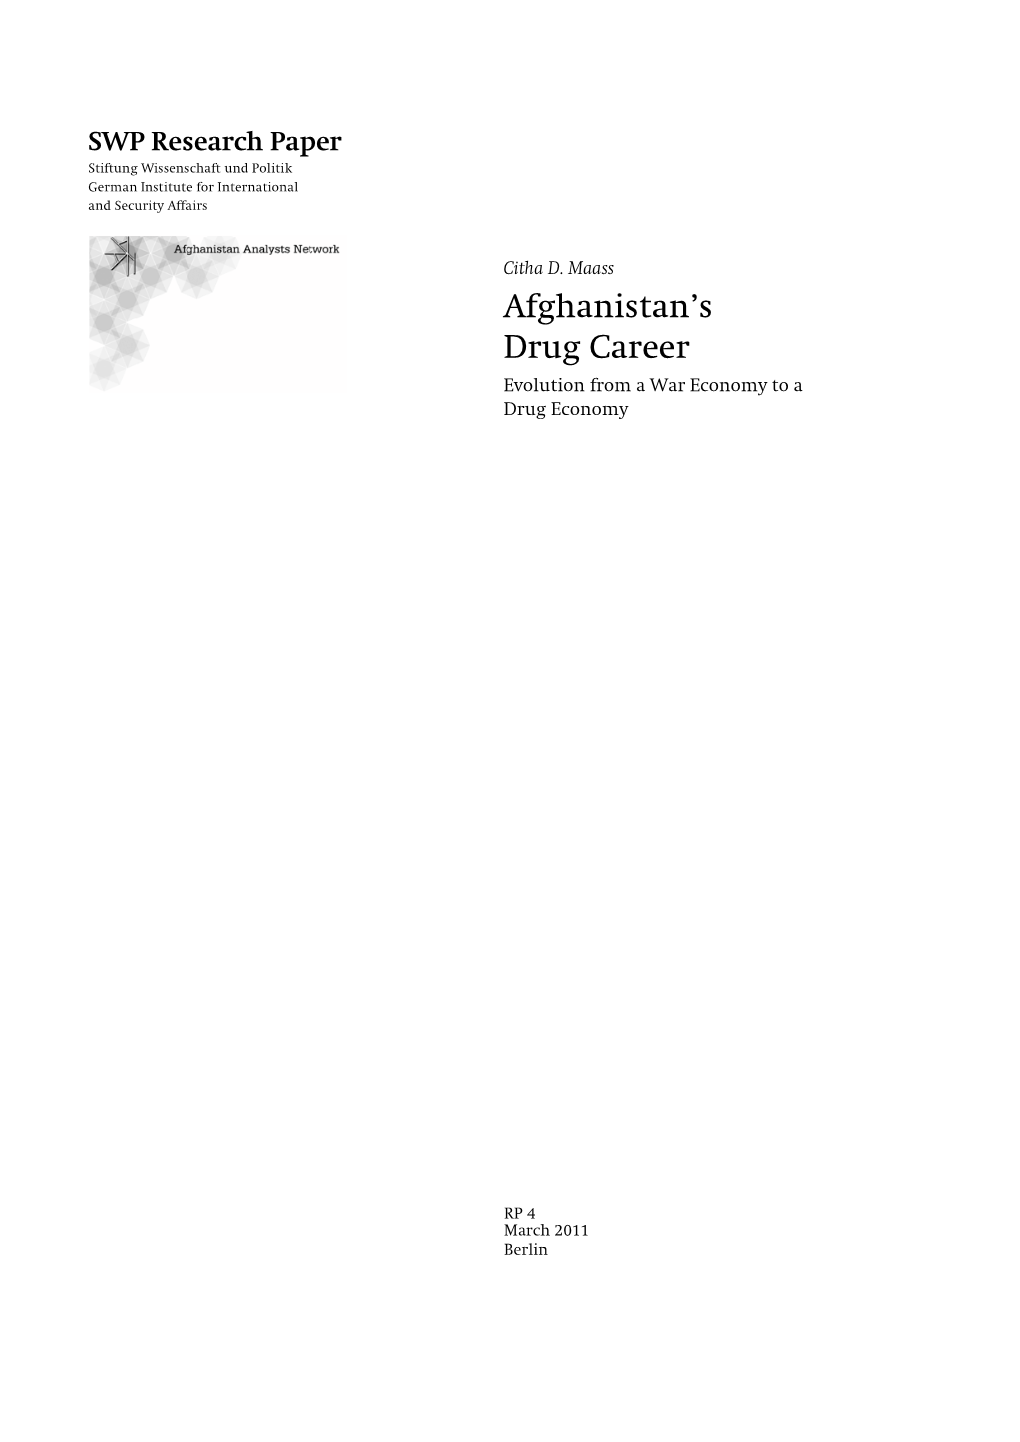 Afghanistan's Drug Career